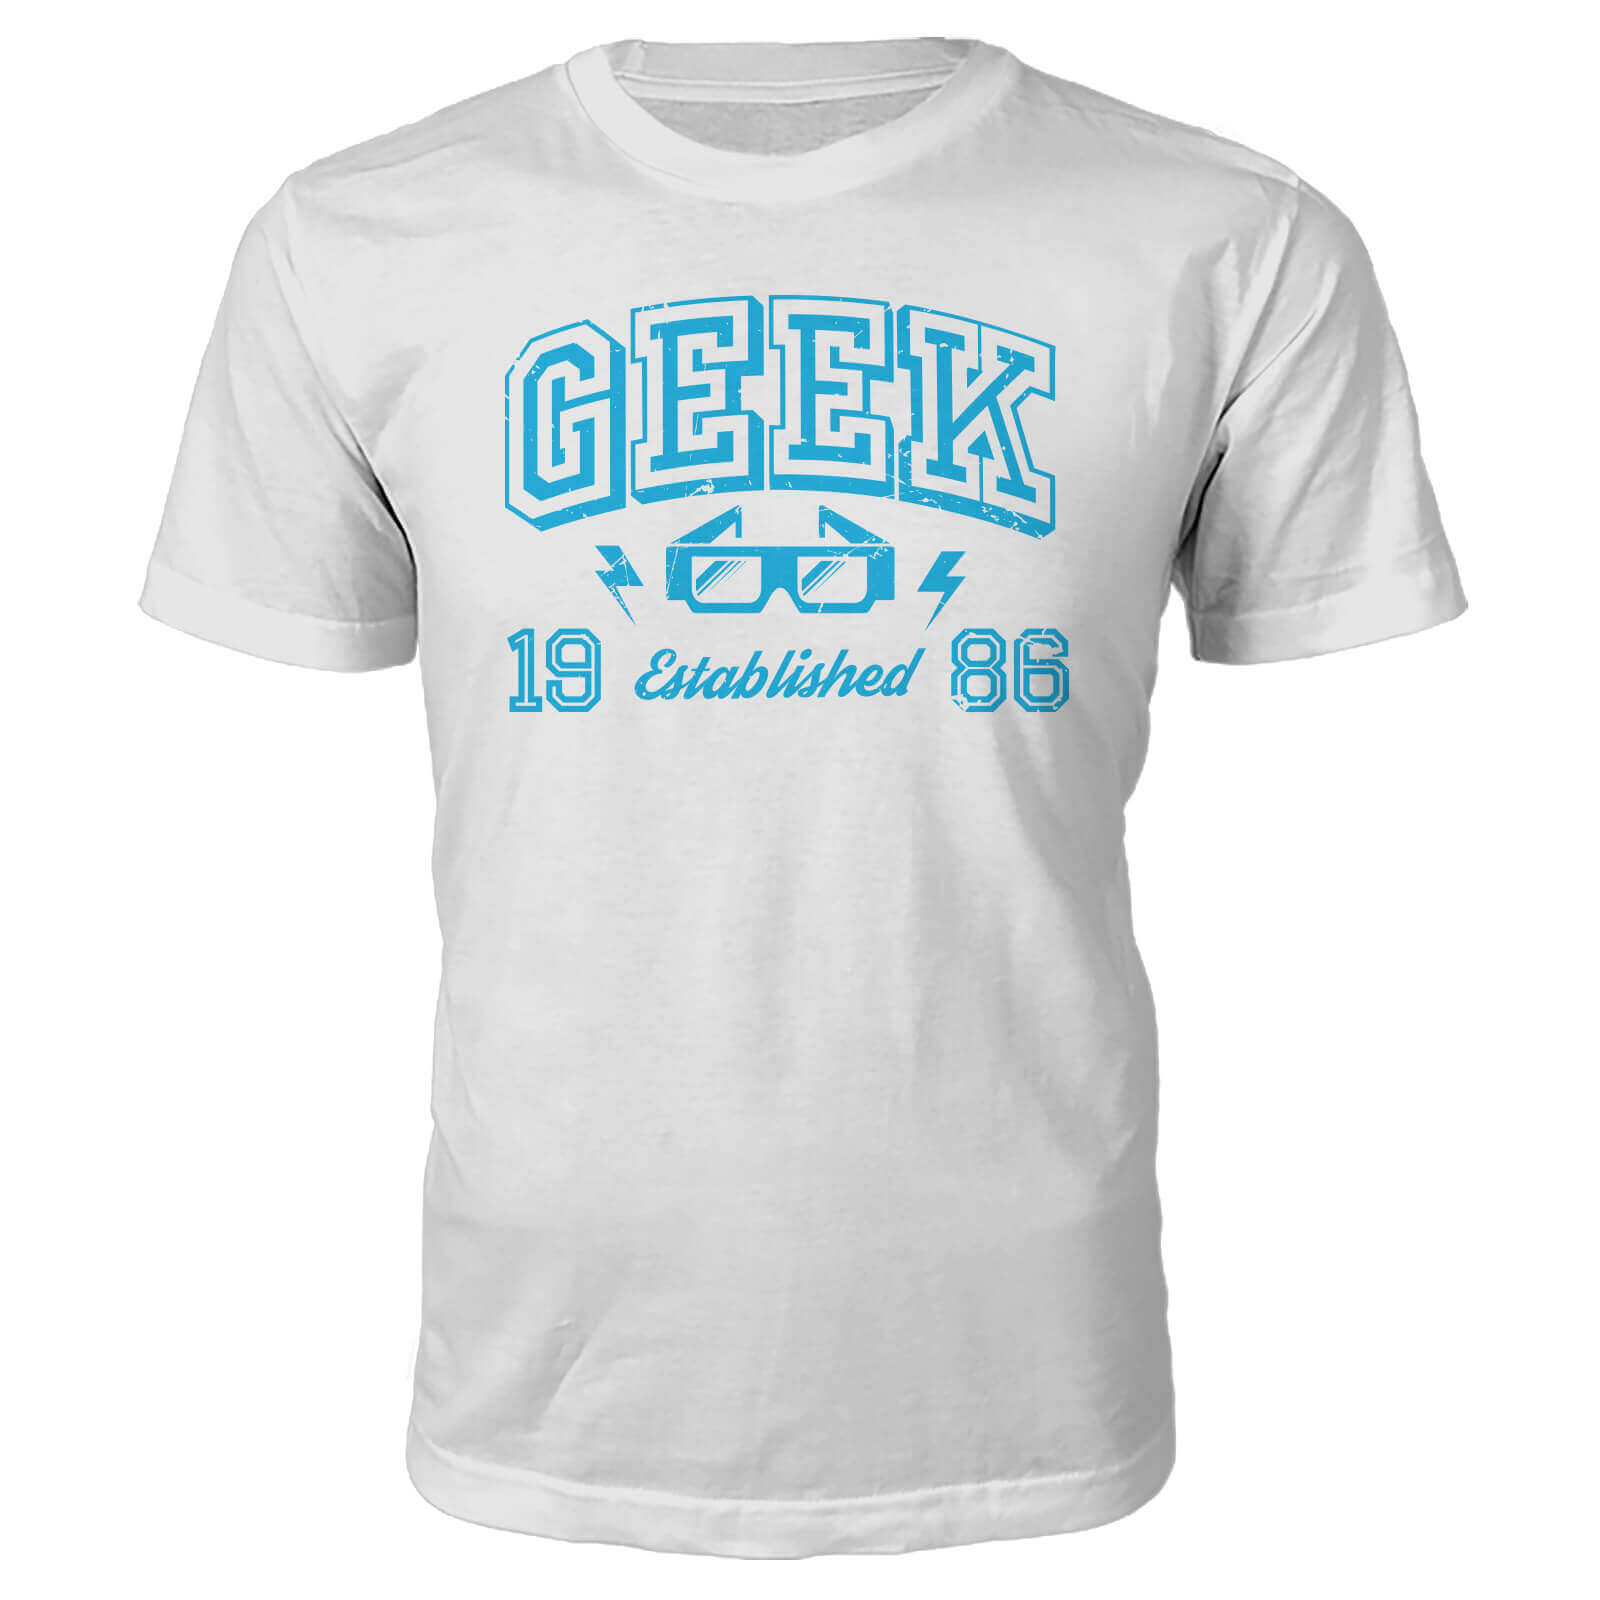 Geek Established 1980's T-Shirt- White - XL - 1986